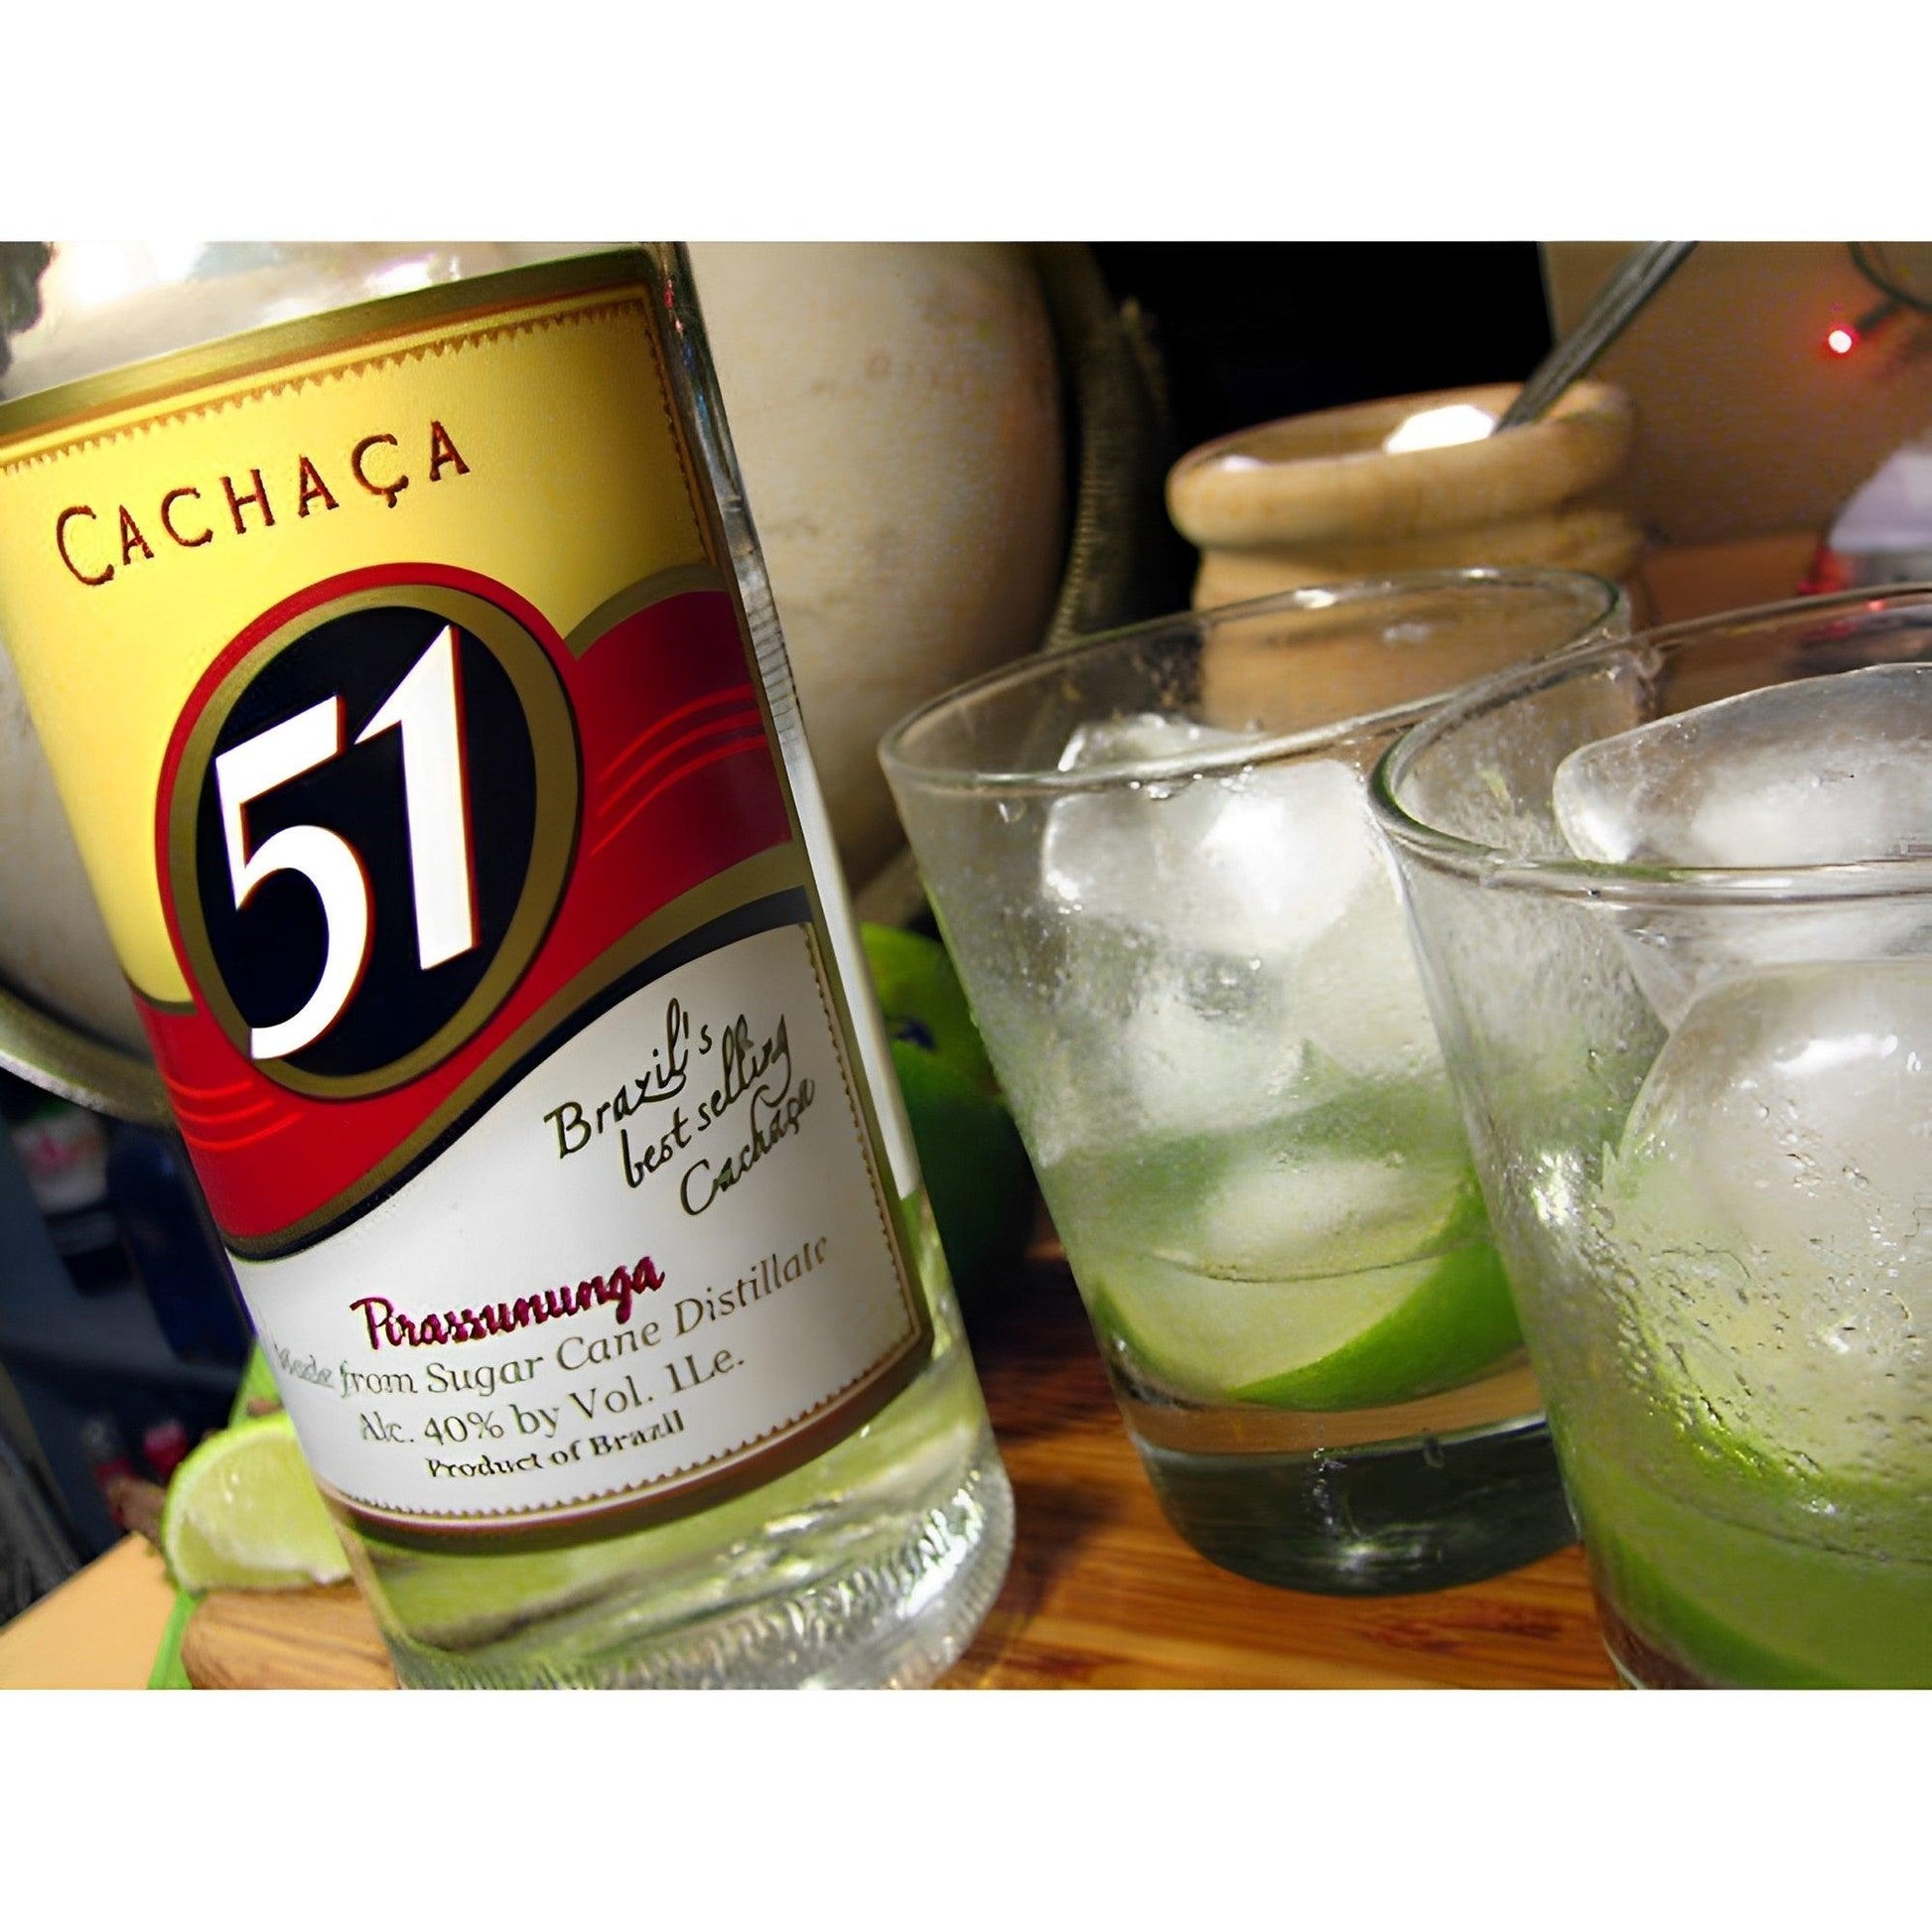 Cachaca 51 965ml - The original from Brazil Same bottle sold in brazilian market - Brazilian Shop